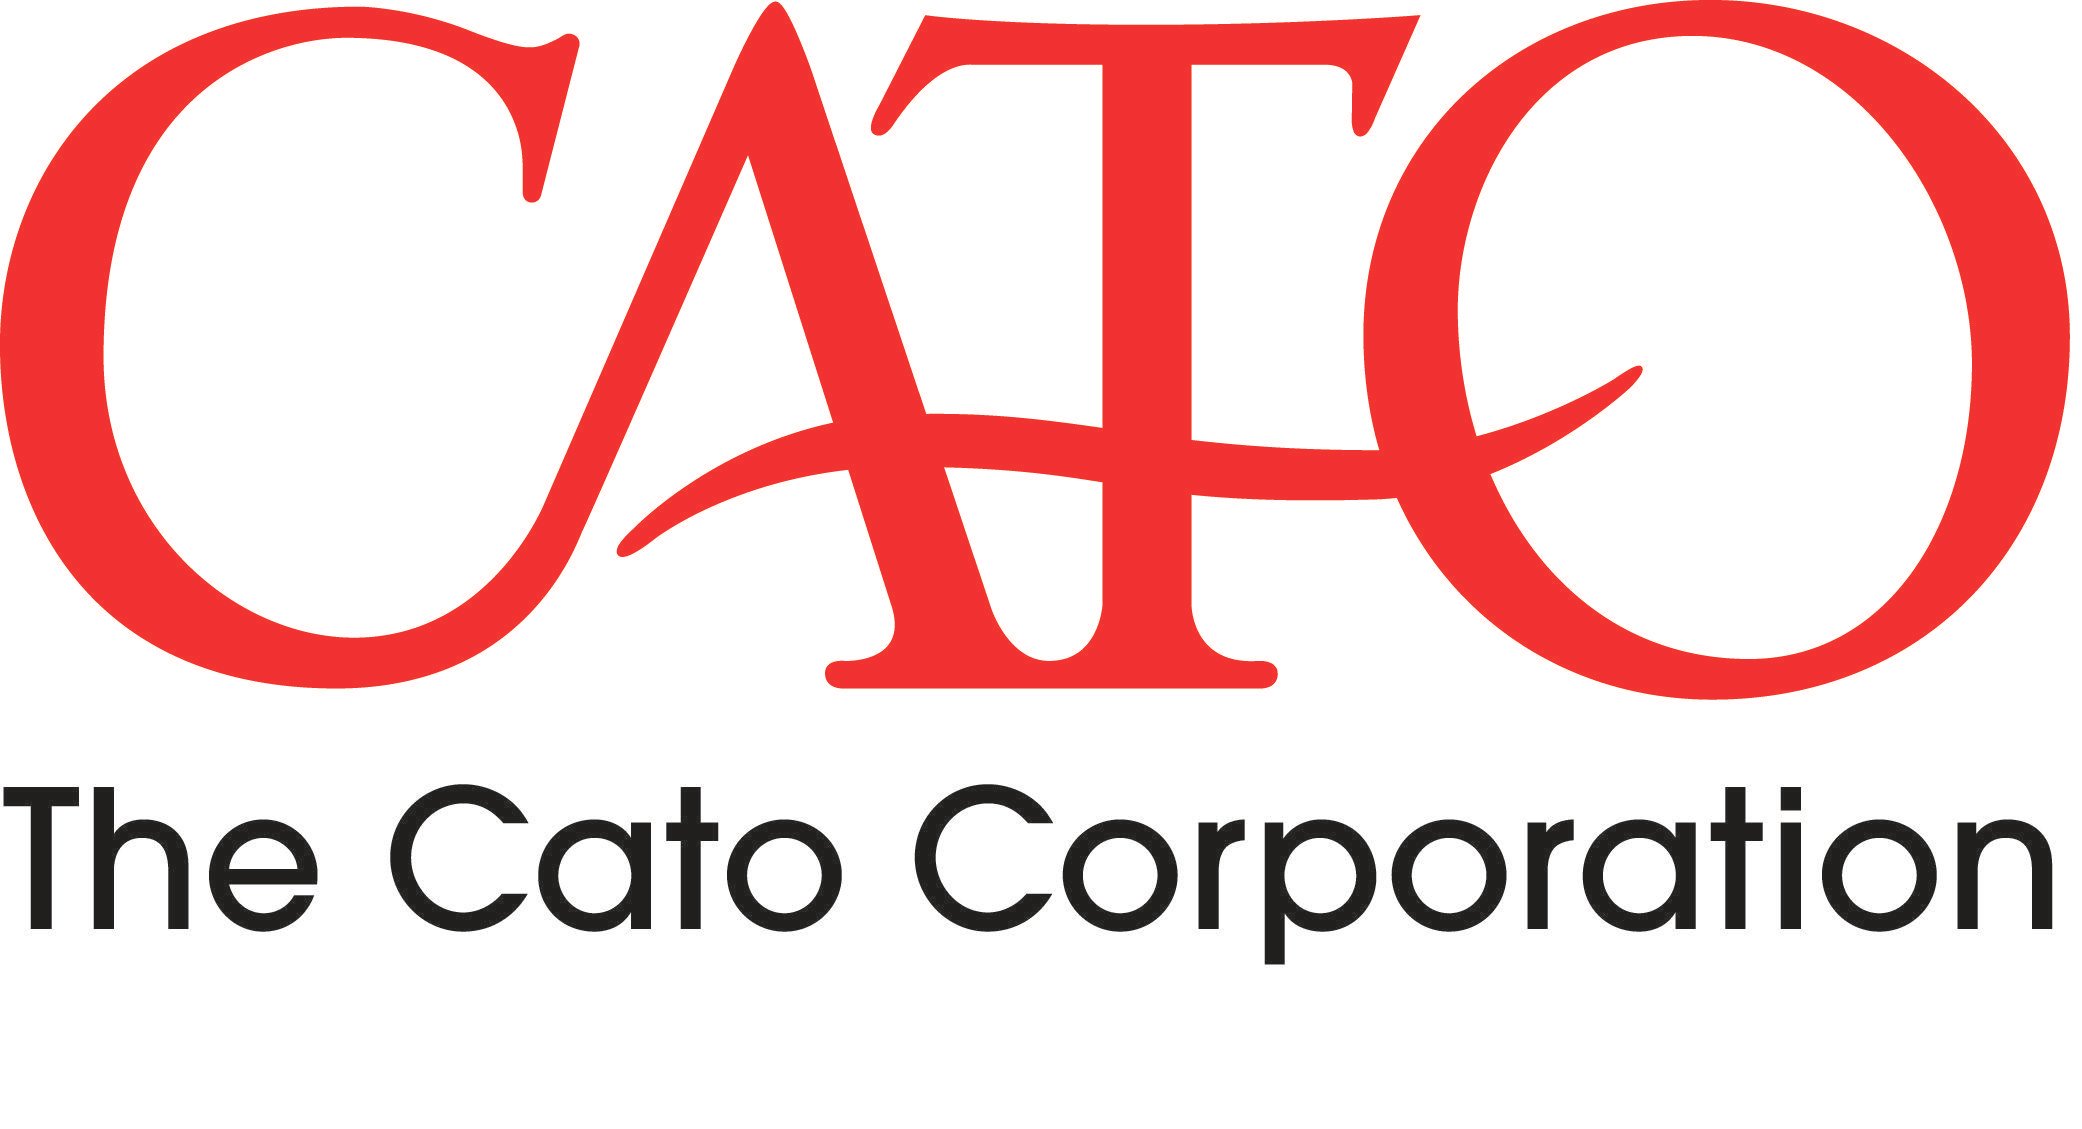 Cato Logo - Cato Corporation (The) « Logos & Brands Directory